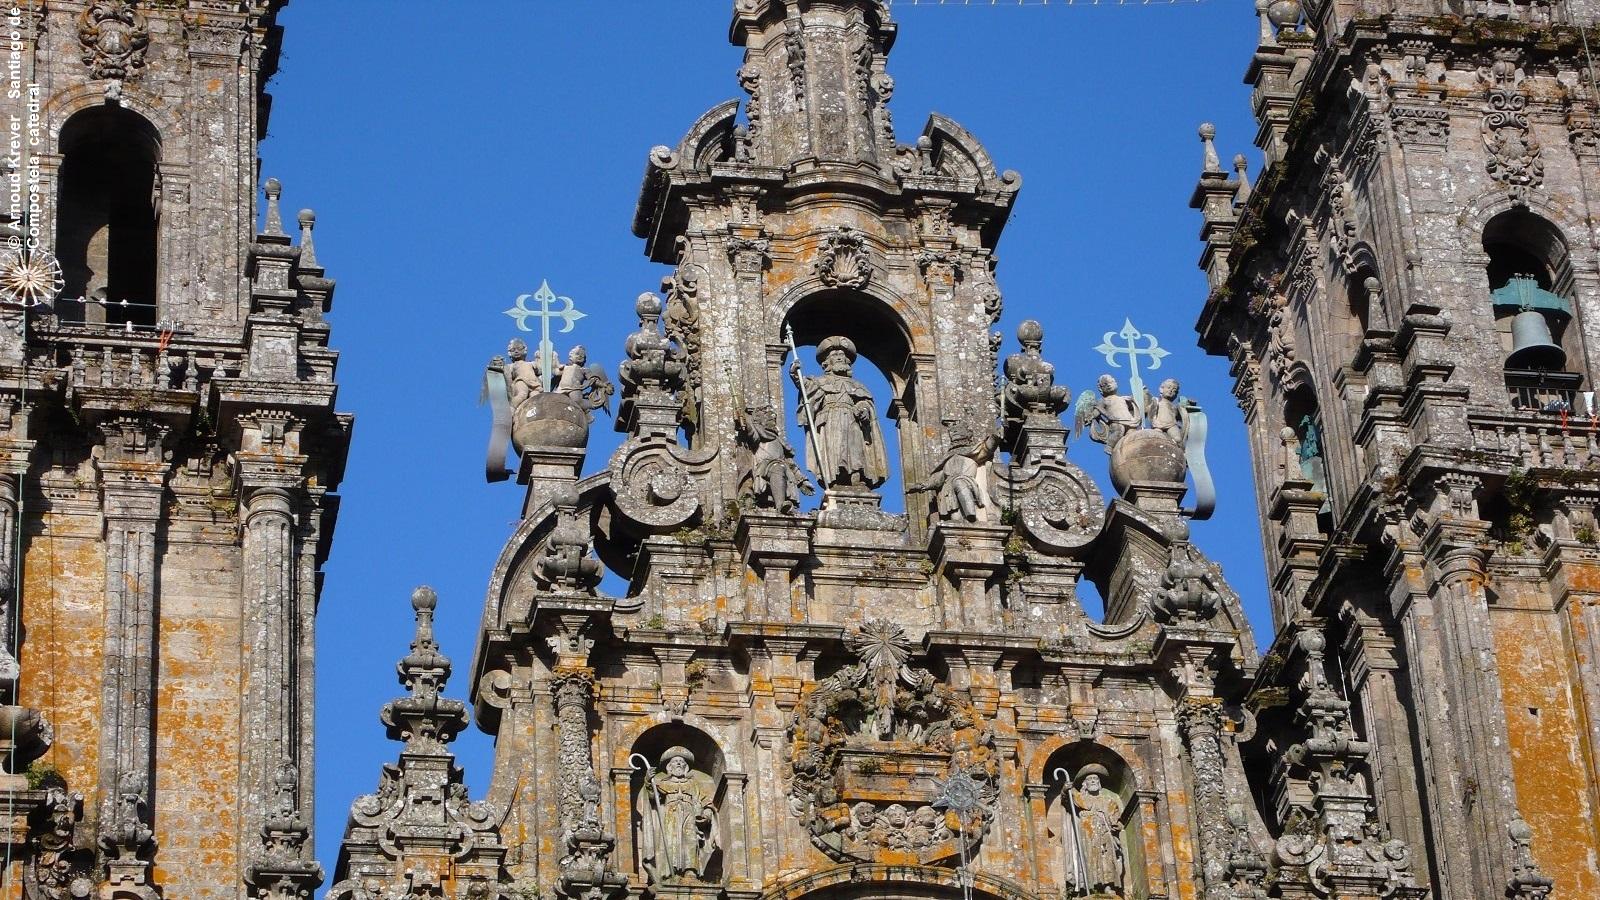 Santiago peregrino - Santiago catedral - Santiago catedral